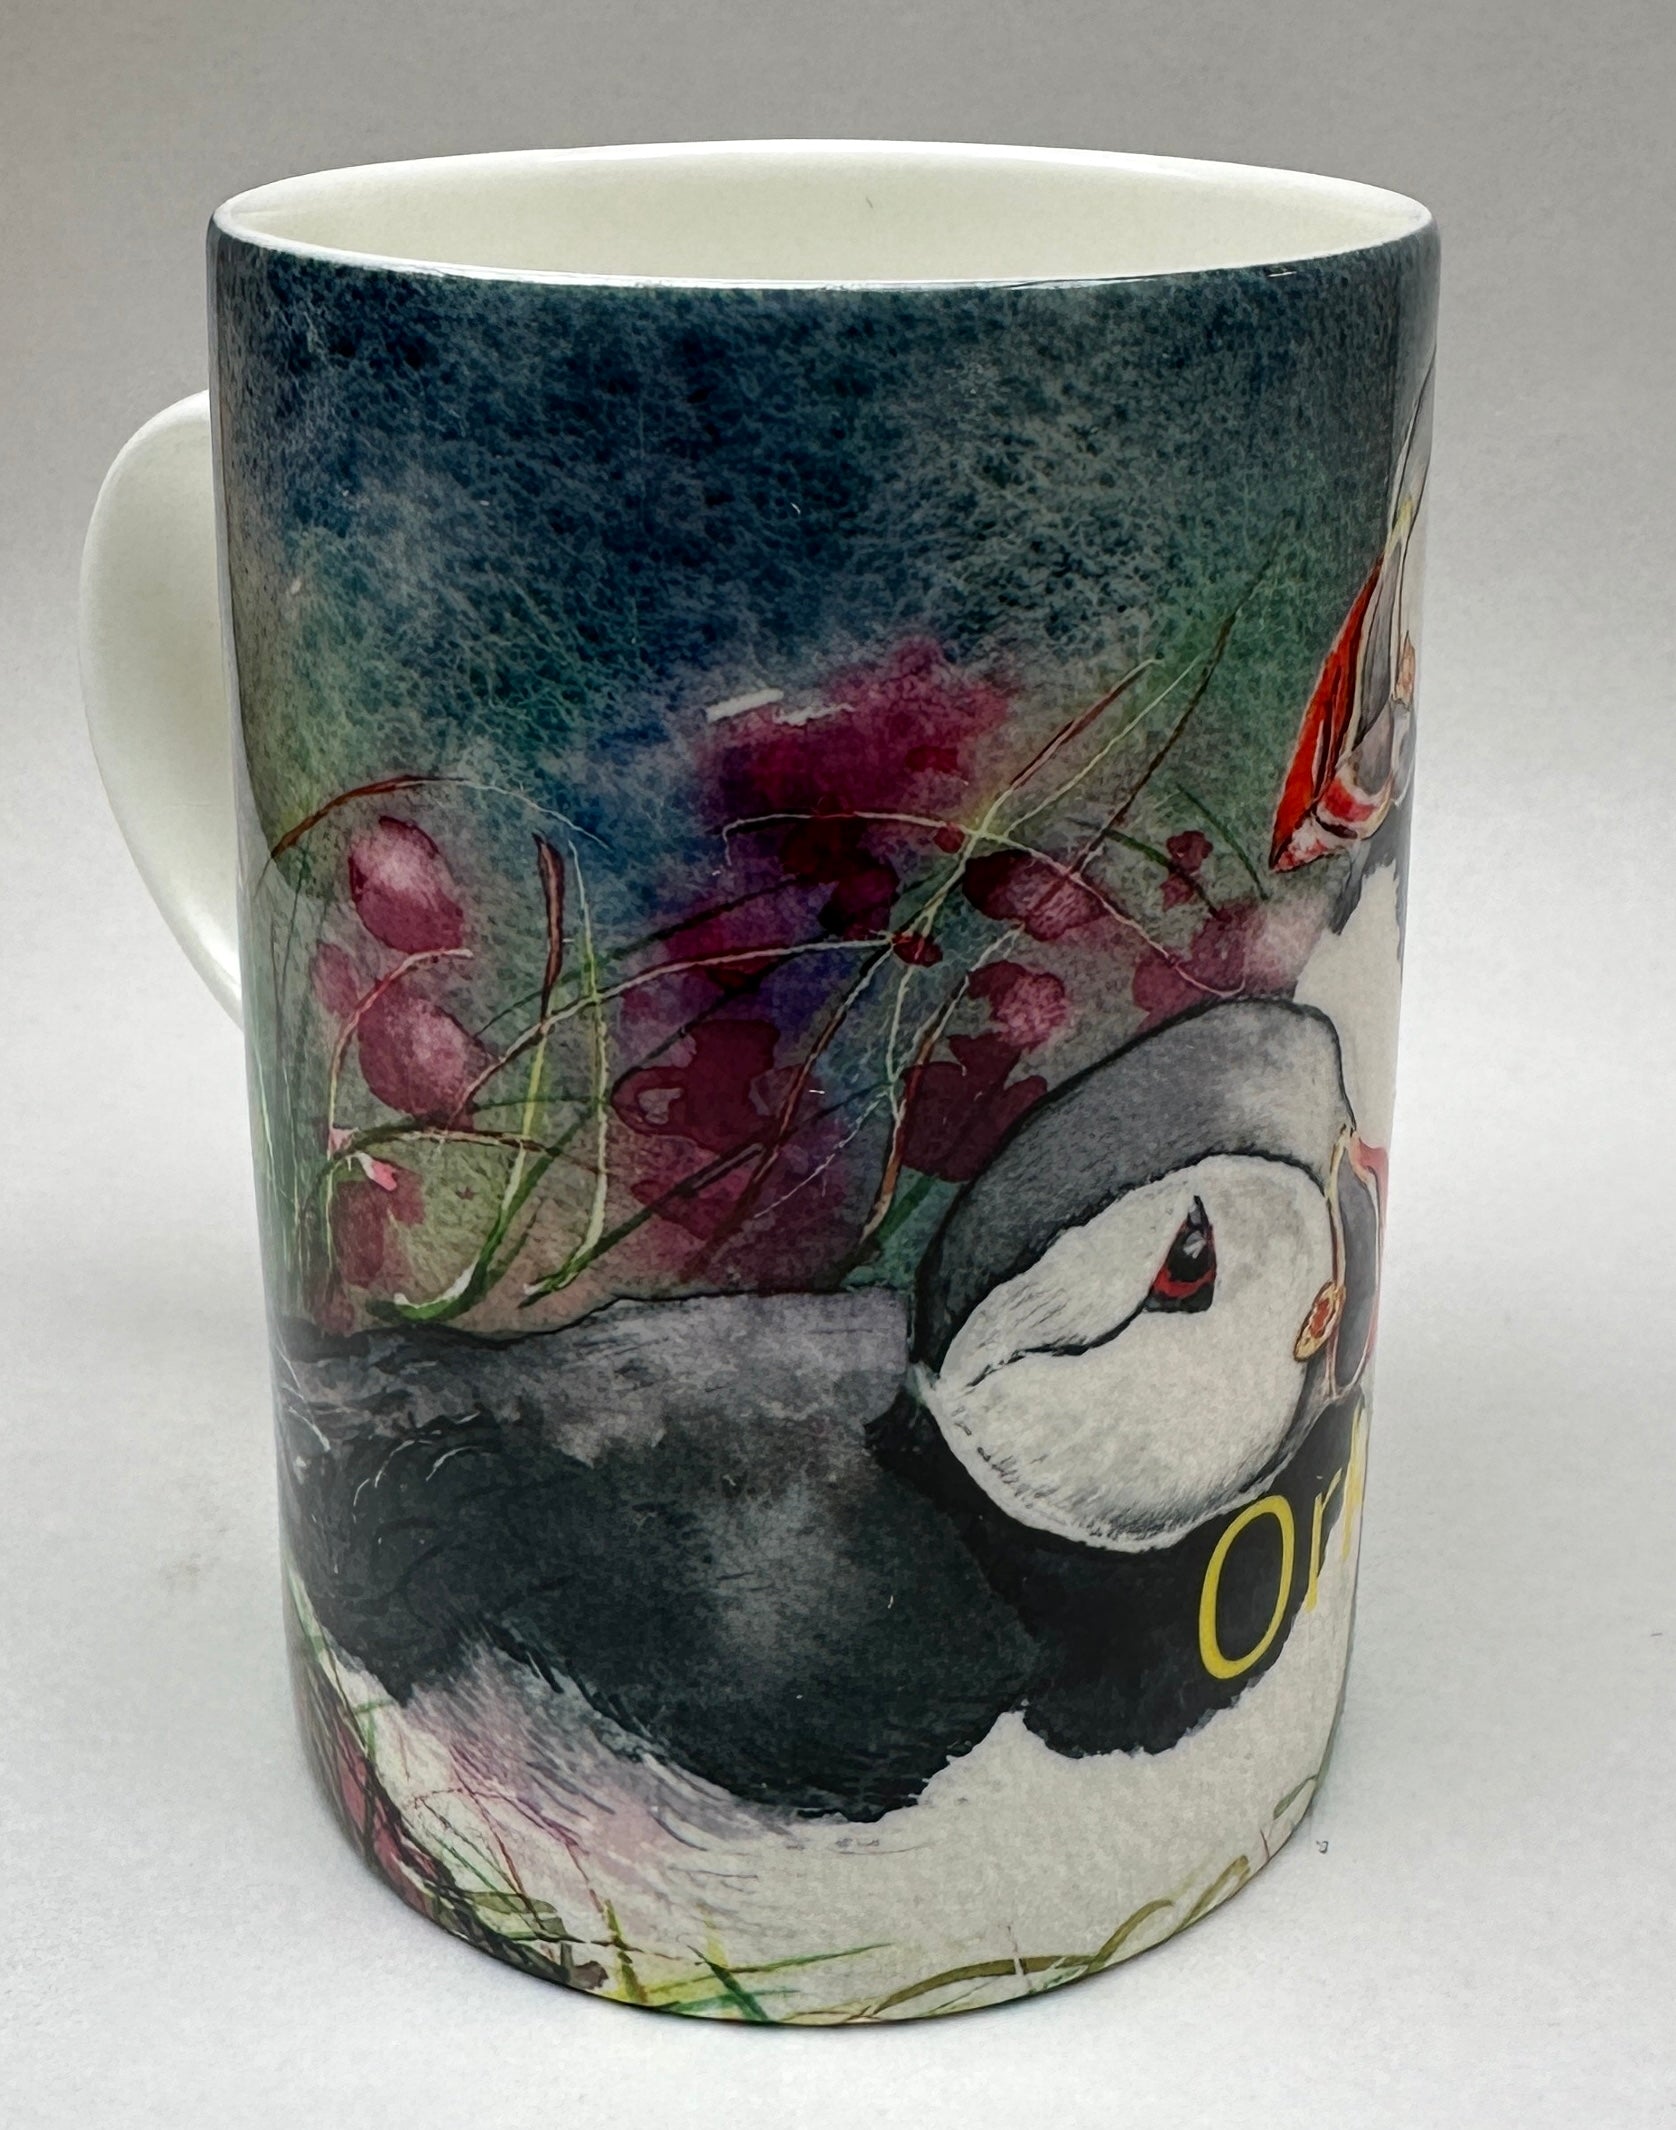 bone china mug printed with a watercolour painting of puffins